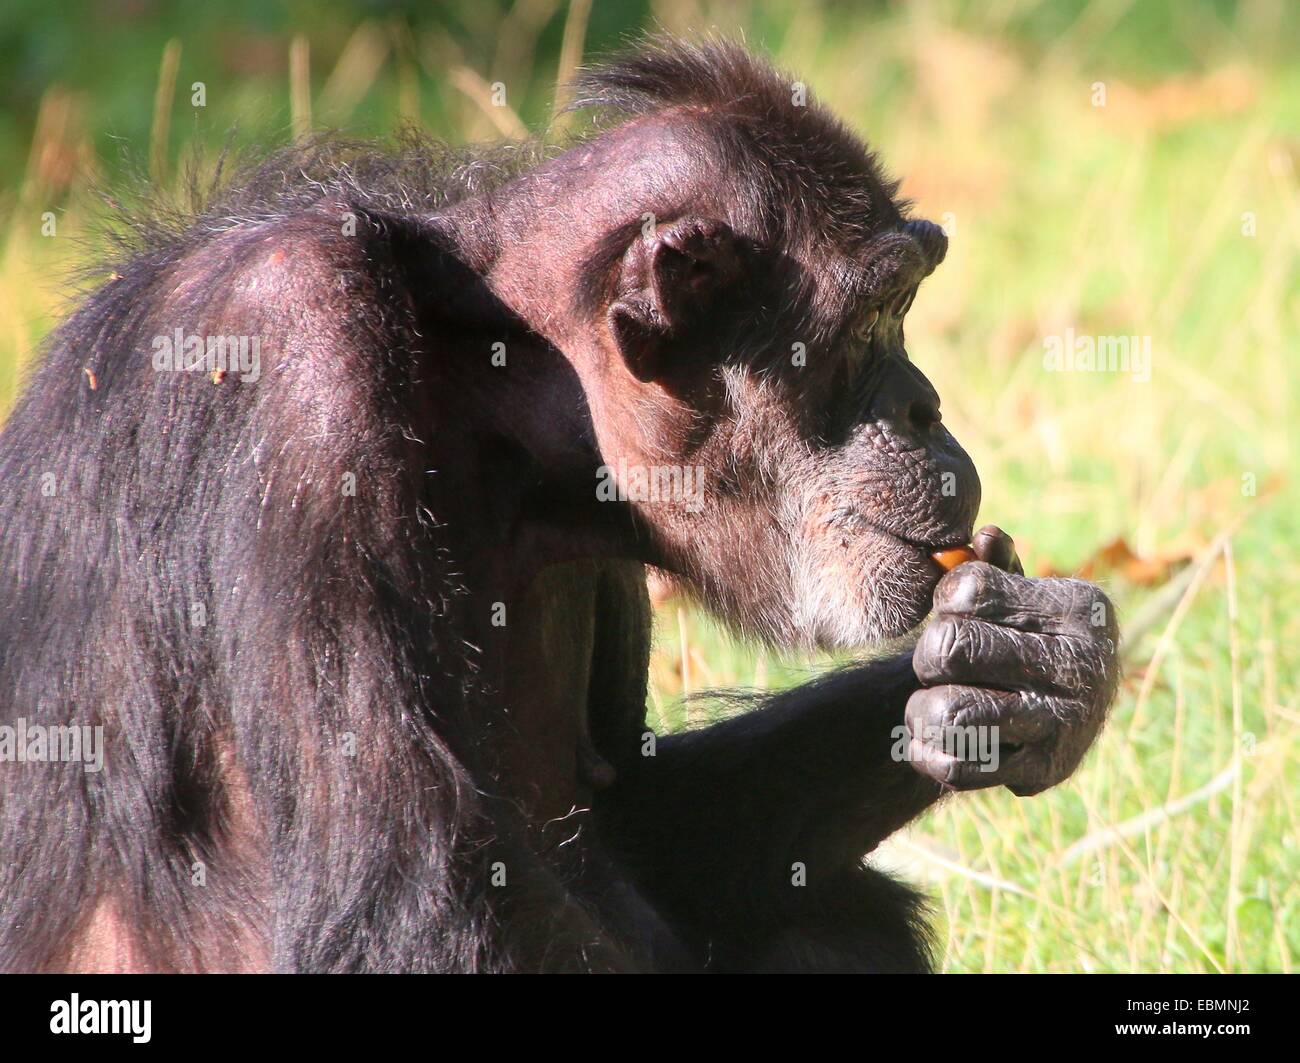 Mature Common chimpanzee (Pan troglodytes) eating nuts, seen in profile Stock Photo